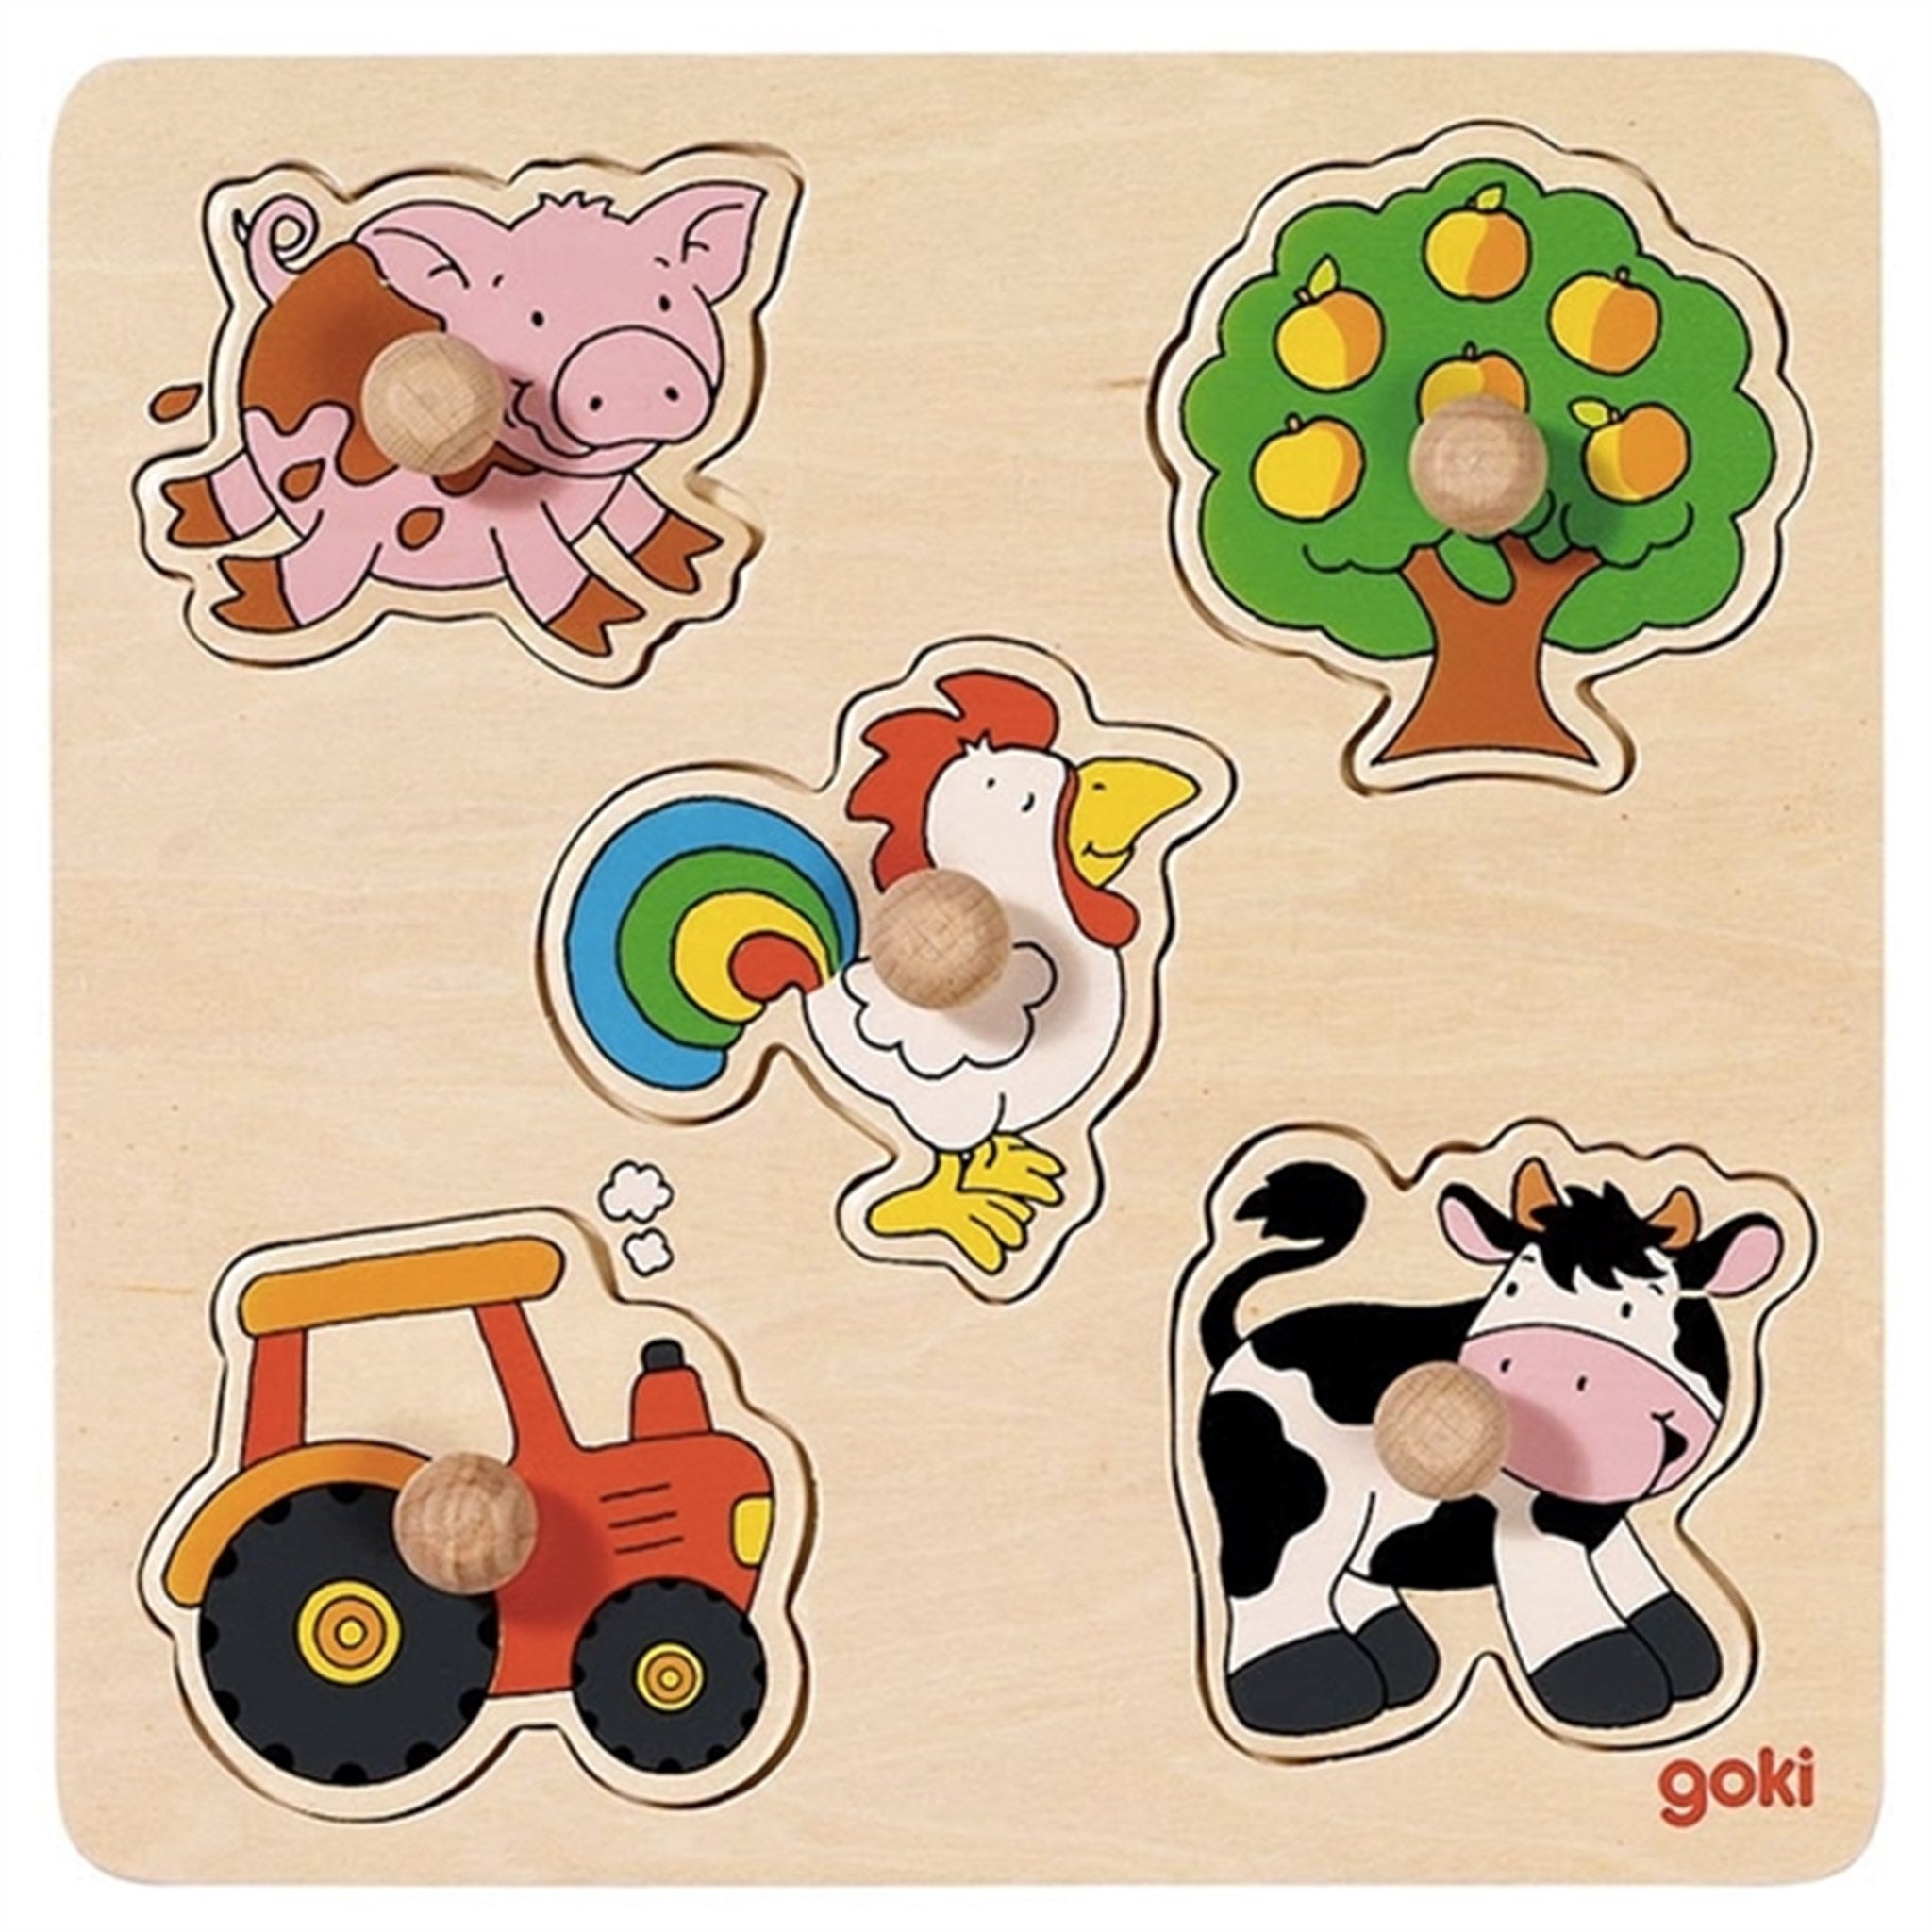 Goki Puzzle - The Farm